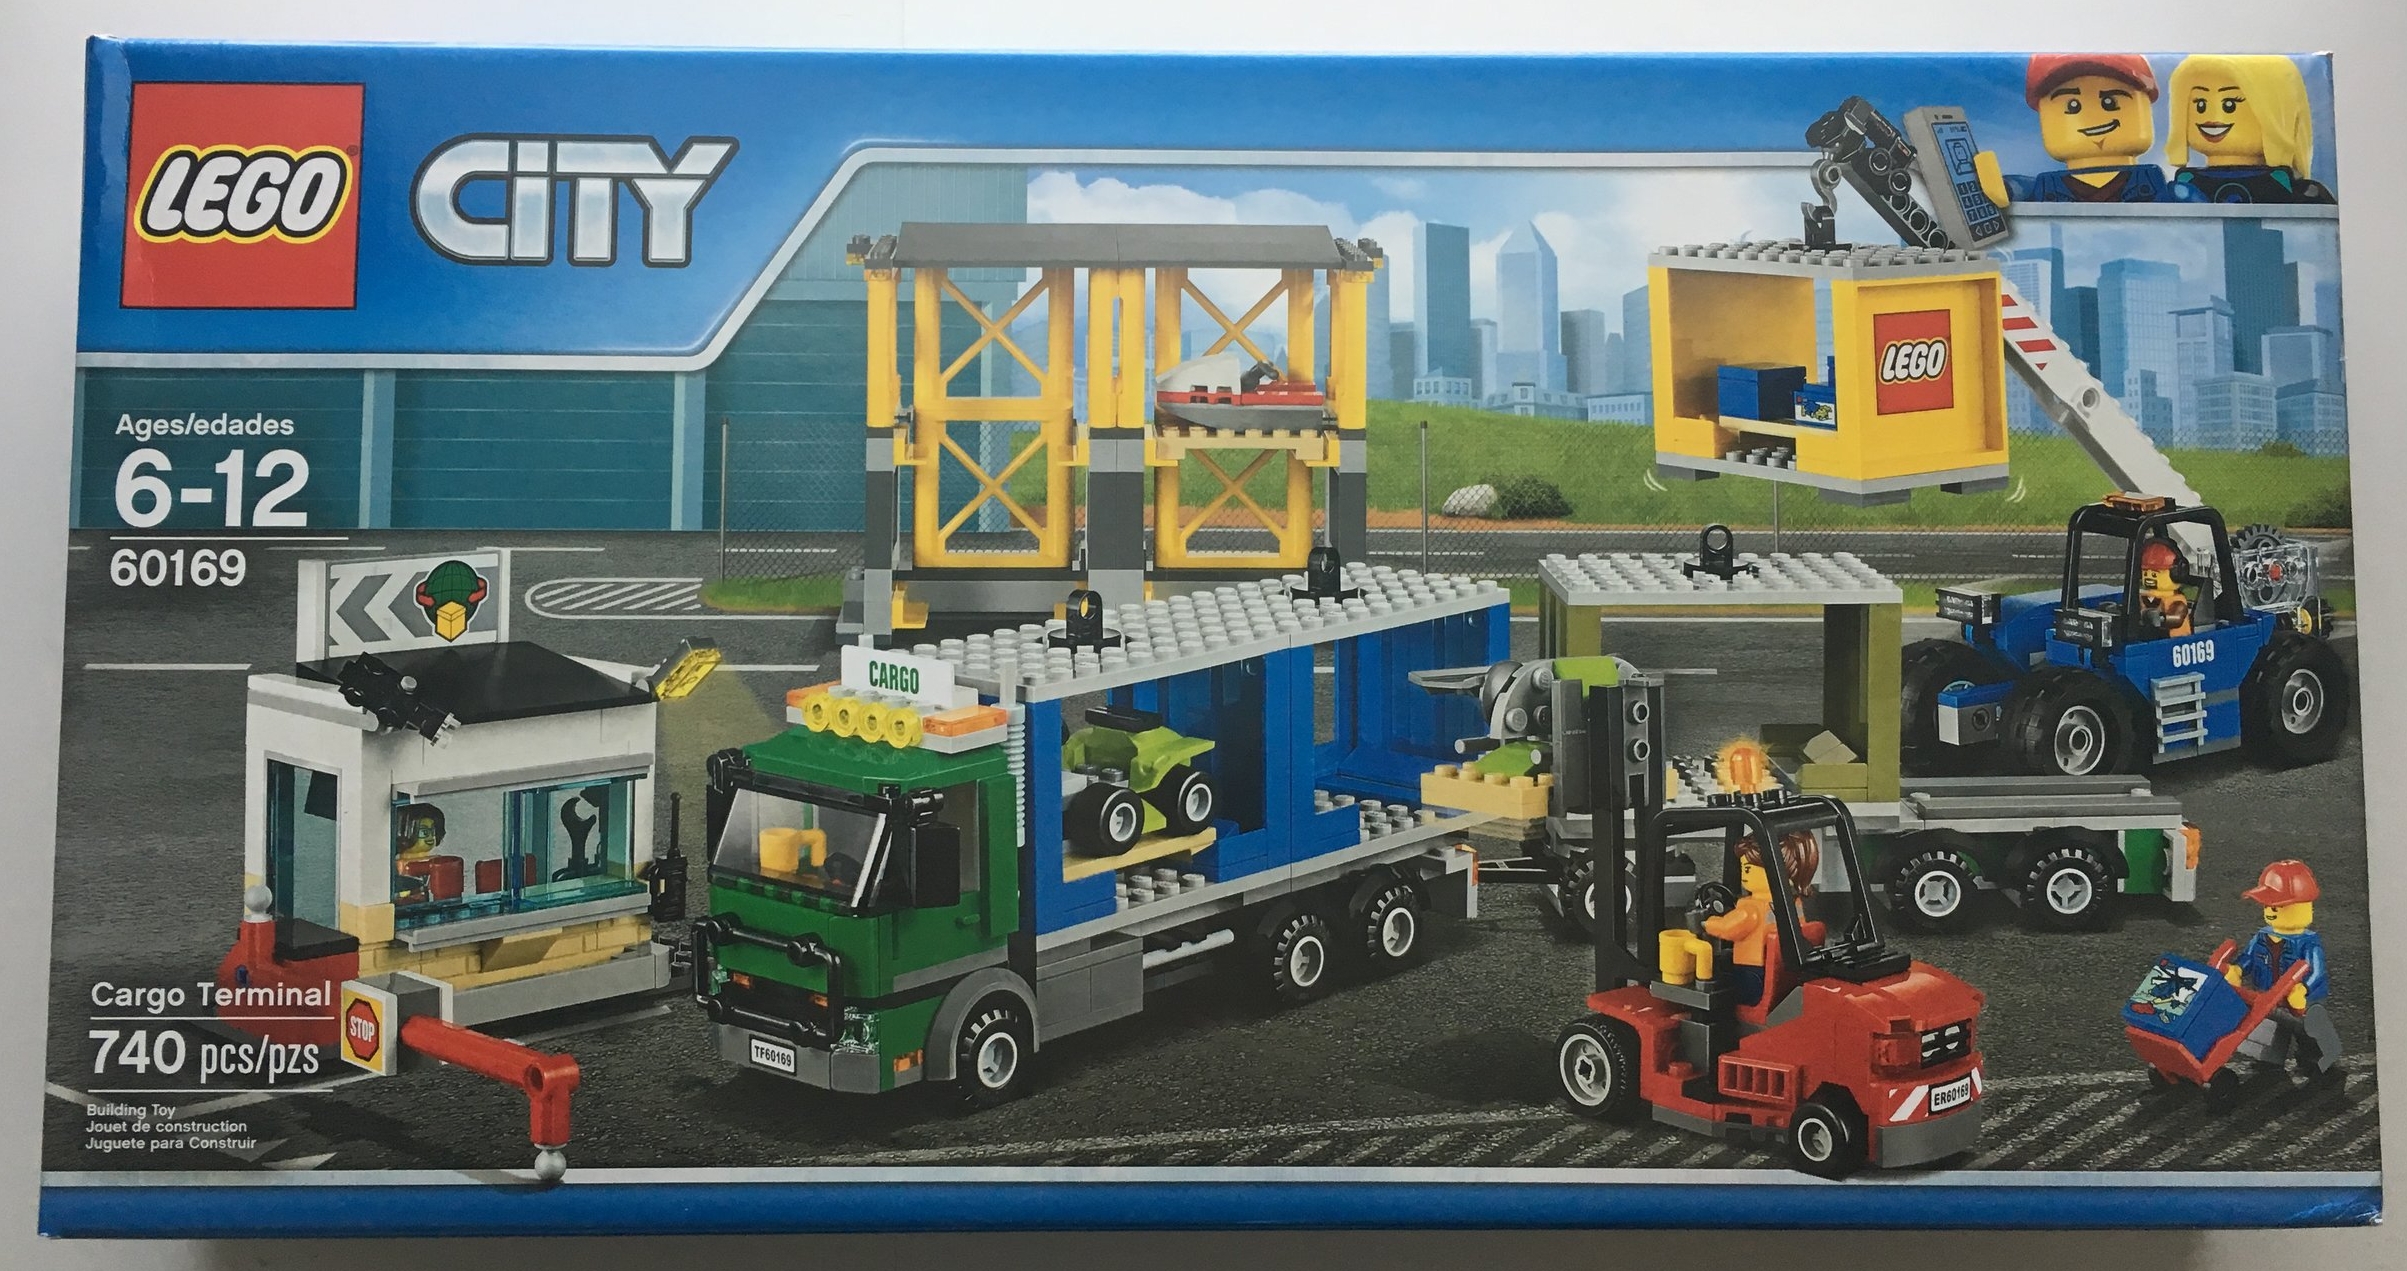 Rust justering Dokument Set Review - #60169 - Cargo Terminal - LEGO City — Bricks for Bricks